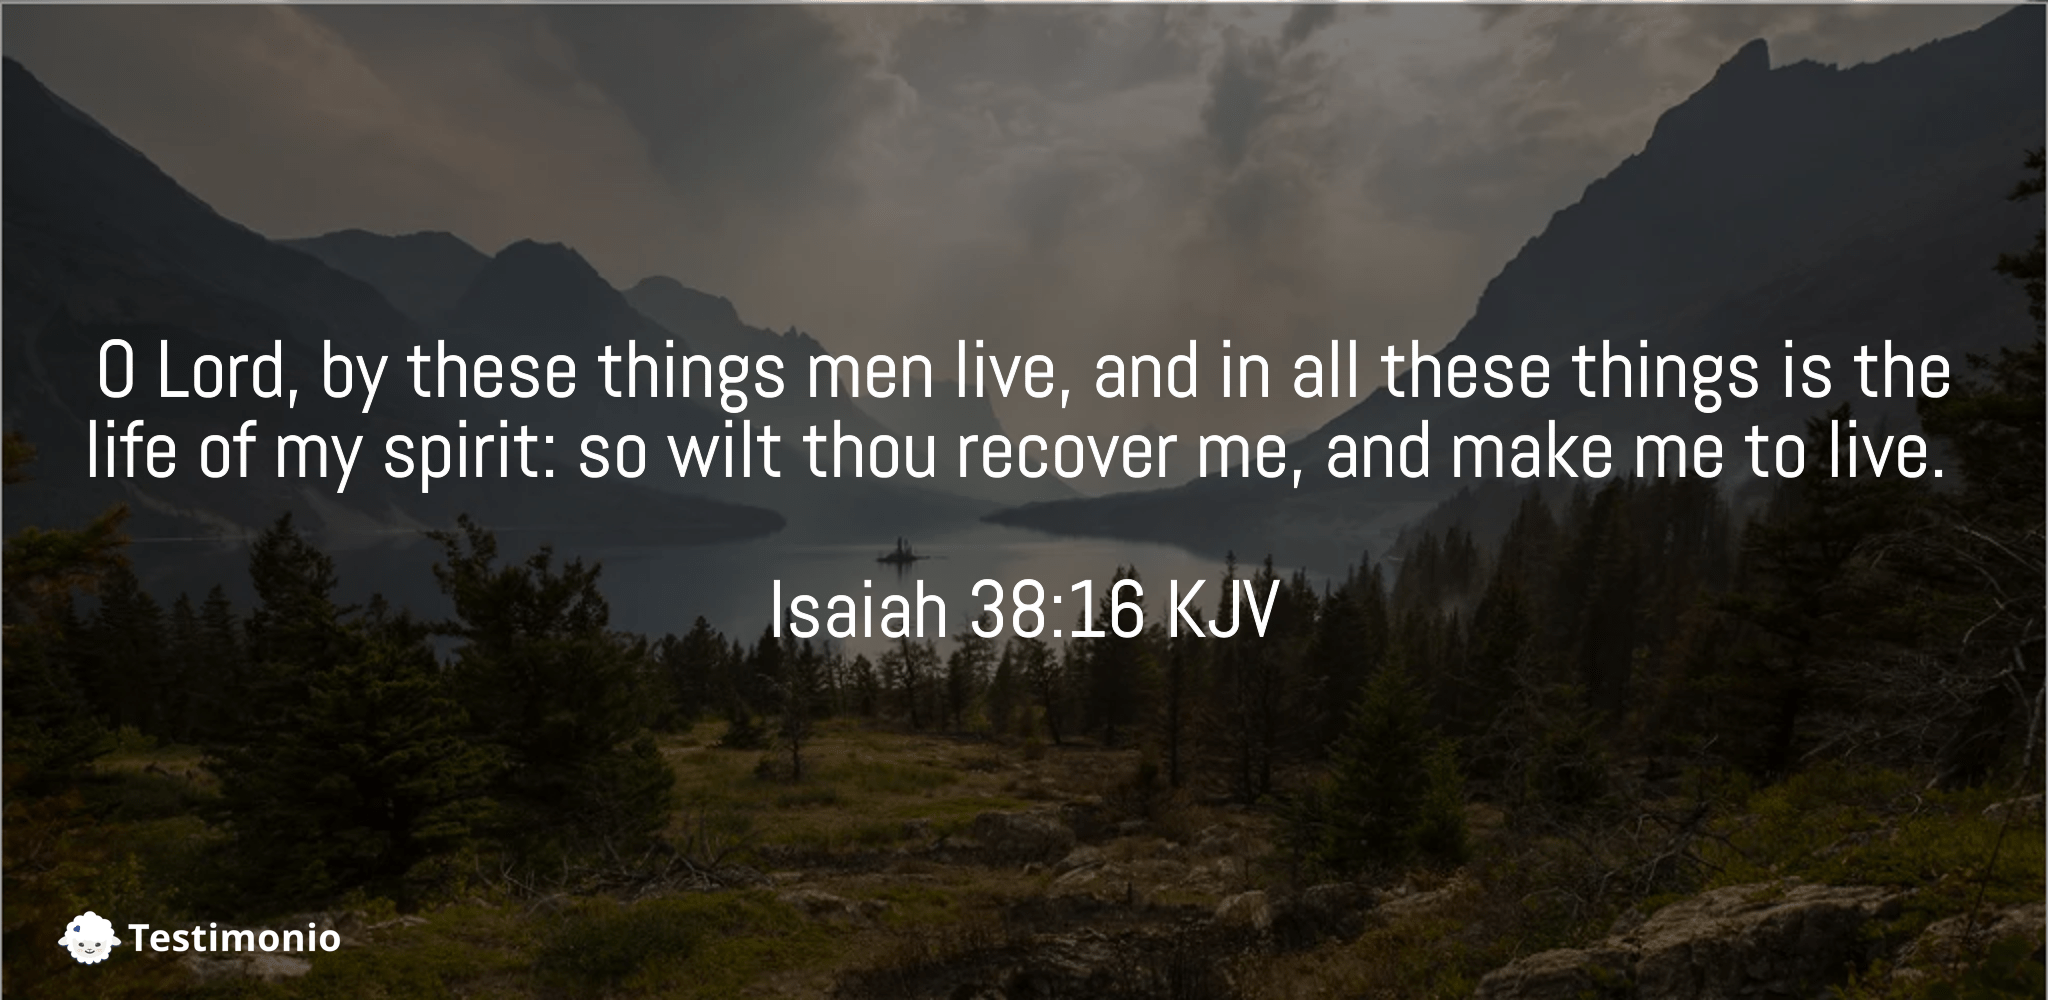 Isaiah 38:16